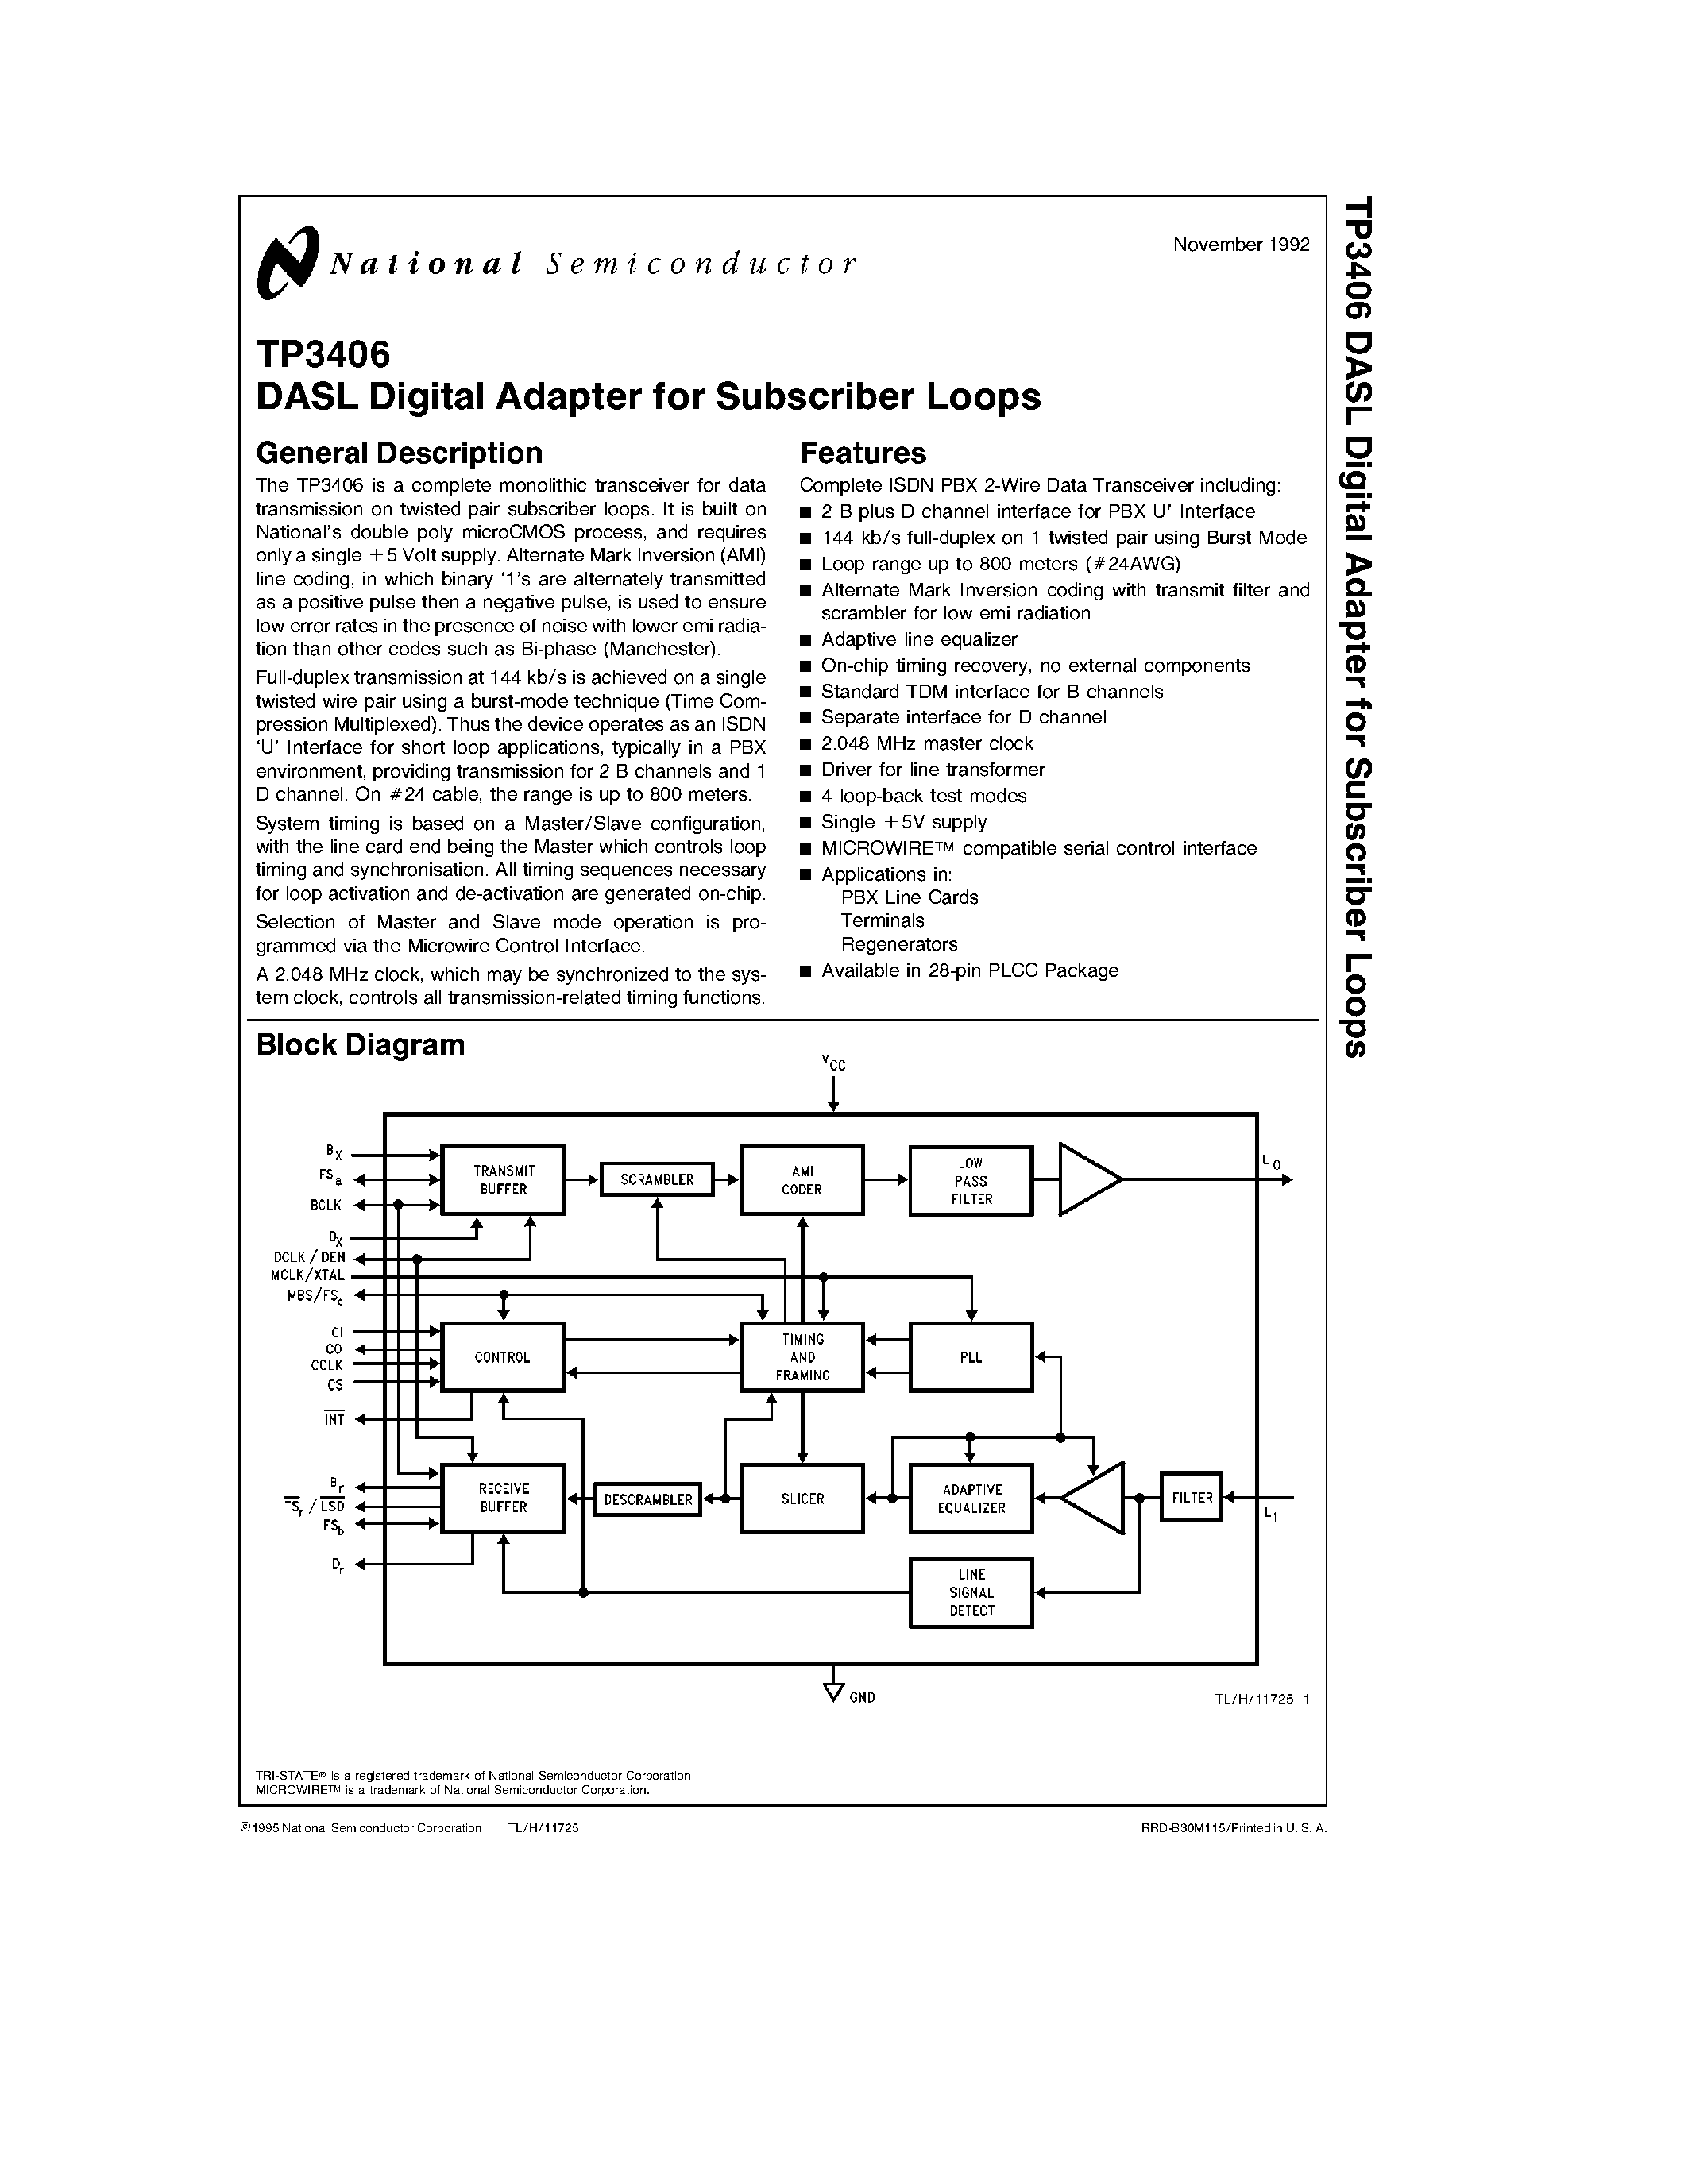 Даташит TP3406 - DASL Digital Adapter for Subscriber Loops страница 1